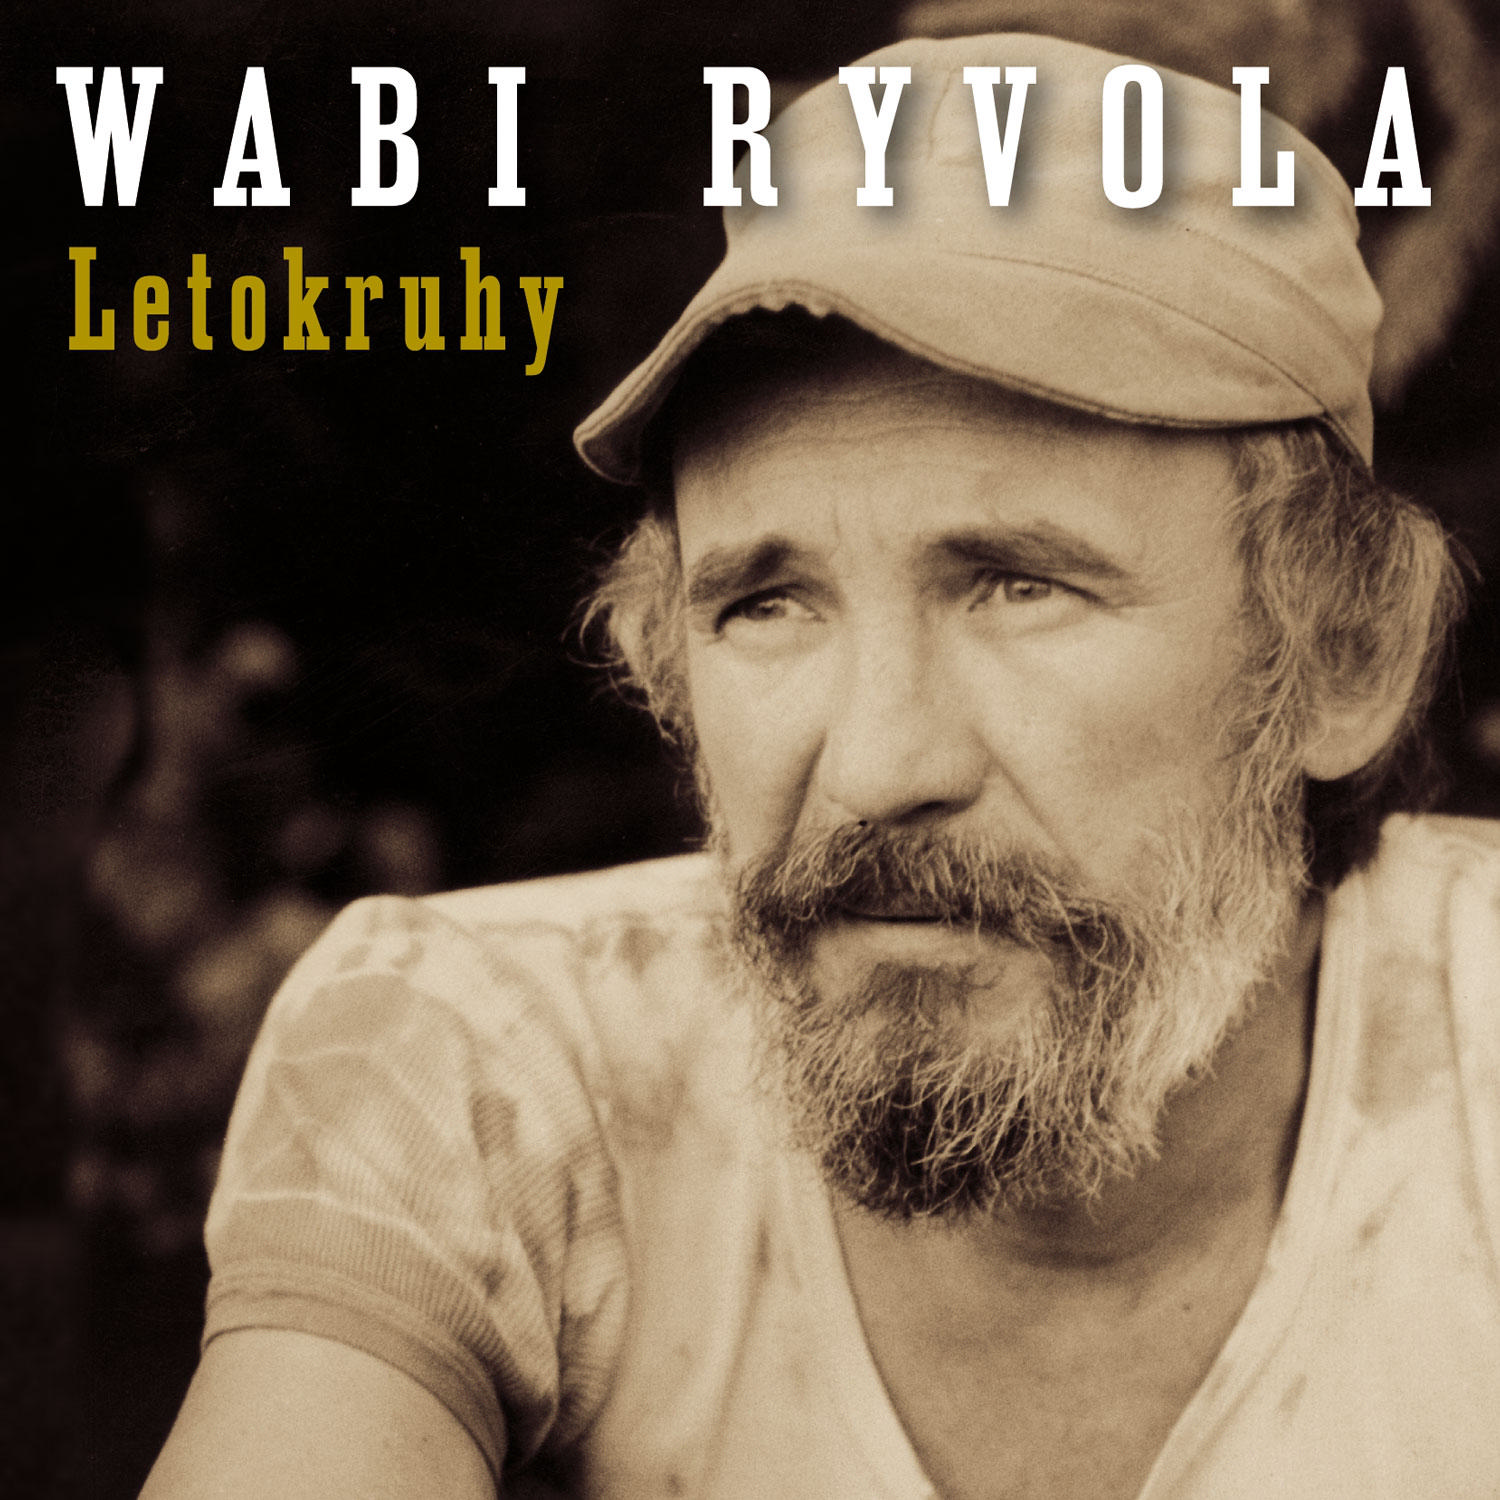 CD Shop - RYVOLA WABI LETOKRUHY